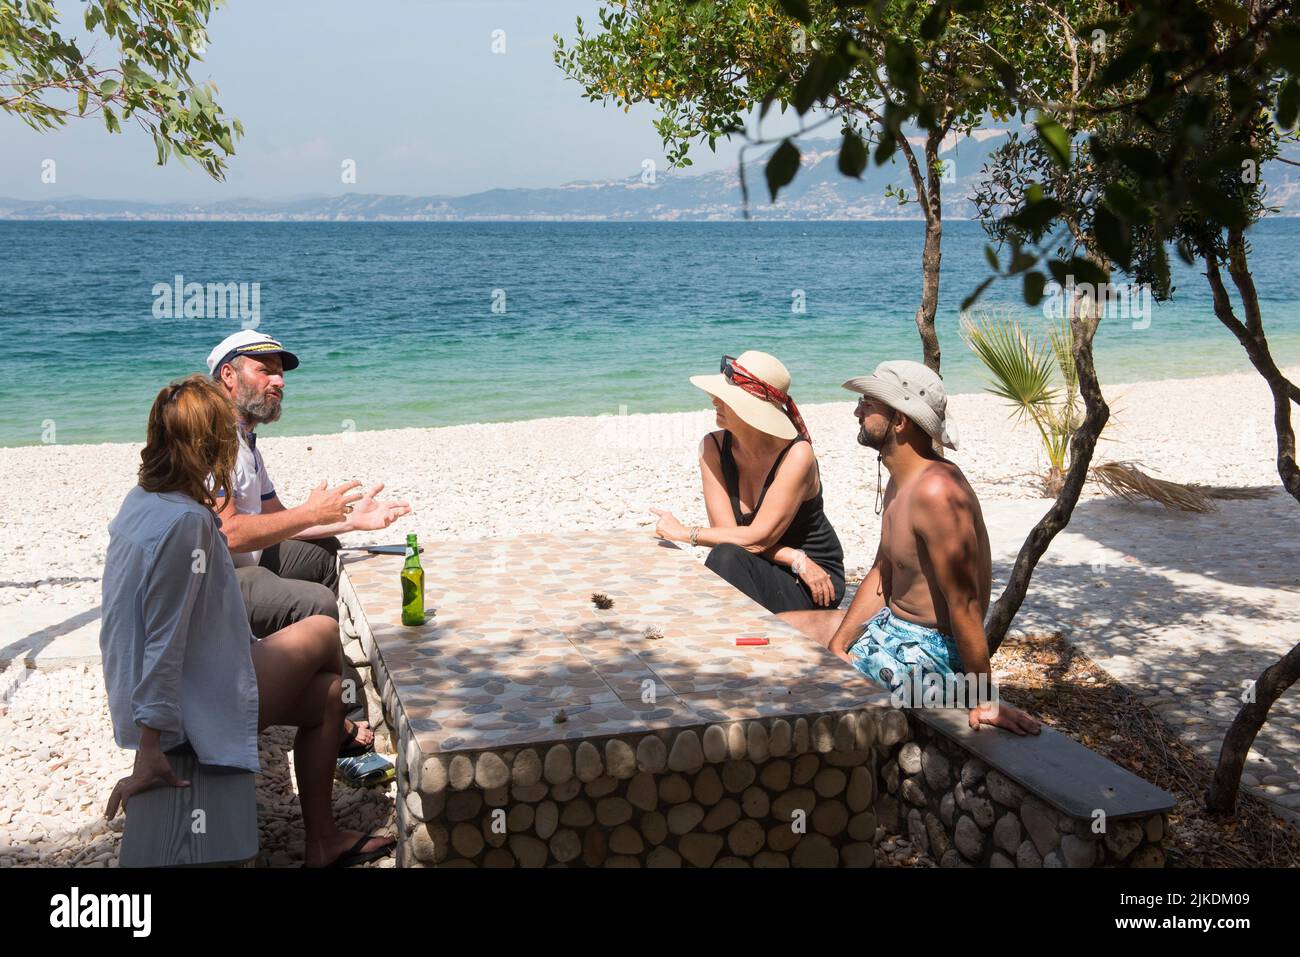 Four persons sitting at a table on the Beach in Zhanpovel Bay, Peninsula of Karaburun, within the Karaburun-Sazan Marine Parc, Vlore bay, Albania, Stock Photo